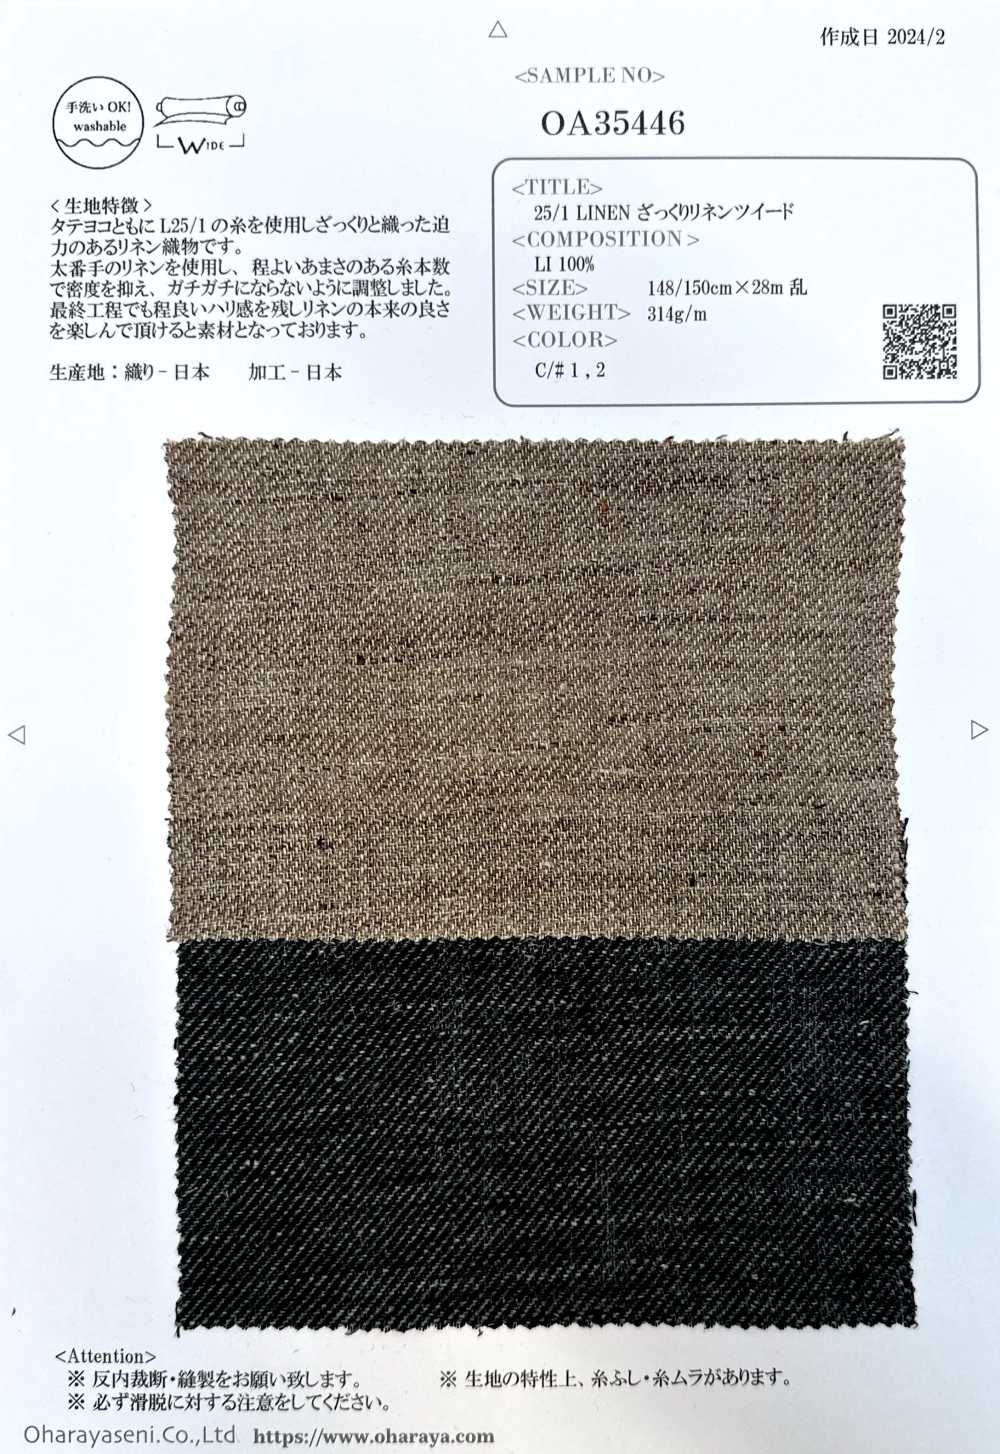 OA35446 25/1 LIN Grossièrement Lin Tweed[Fabrication De Textile] Oharayaseni